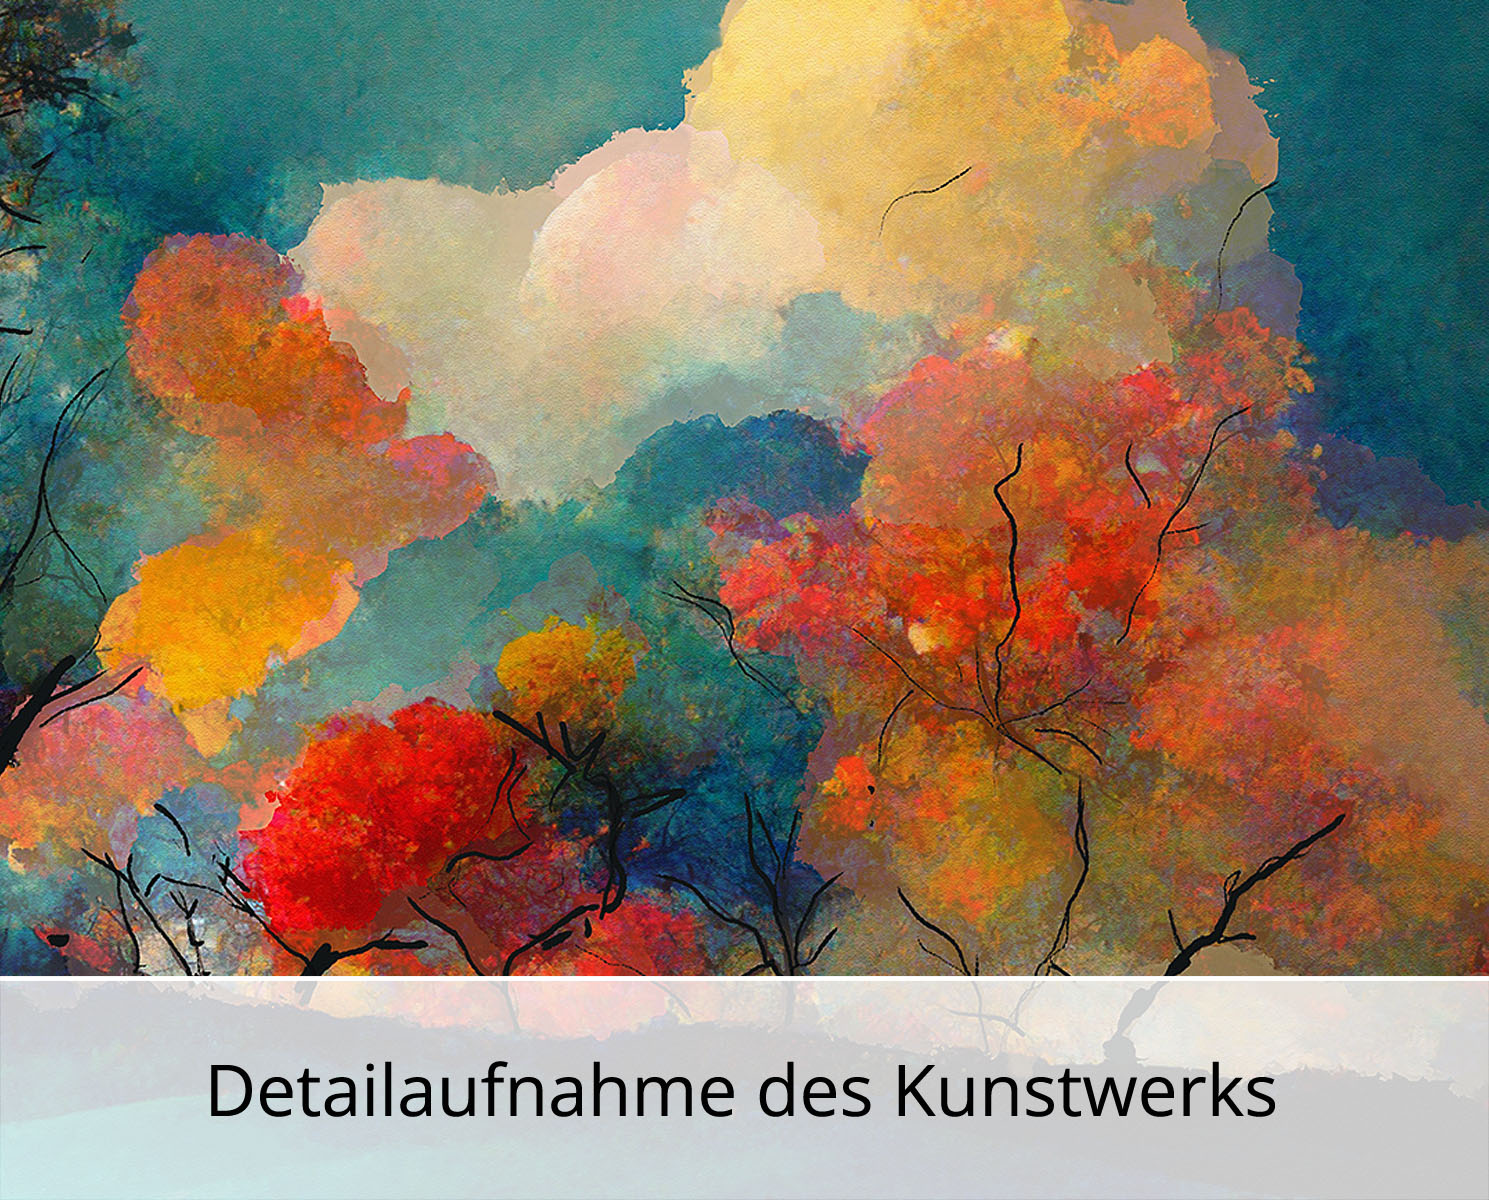 H. Mühlbauer-Gardemin: "Landschaft mit Turm", Moderne Pop Art, Original/serielles Unikat